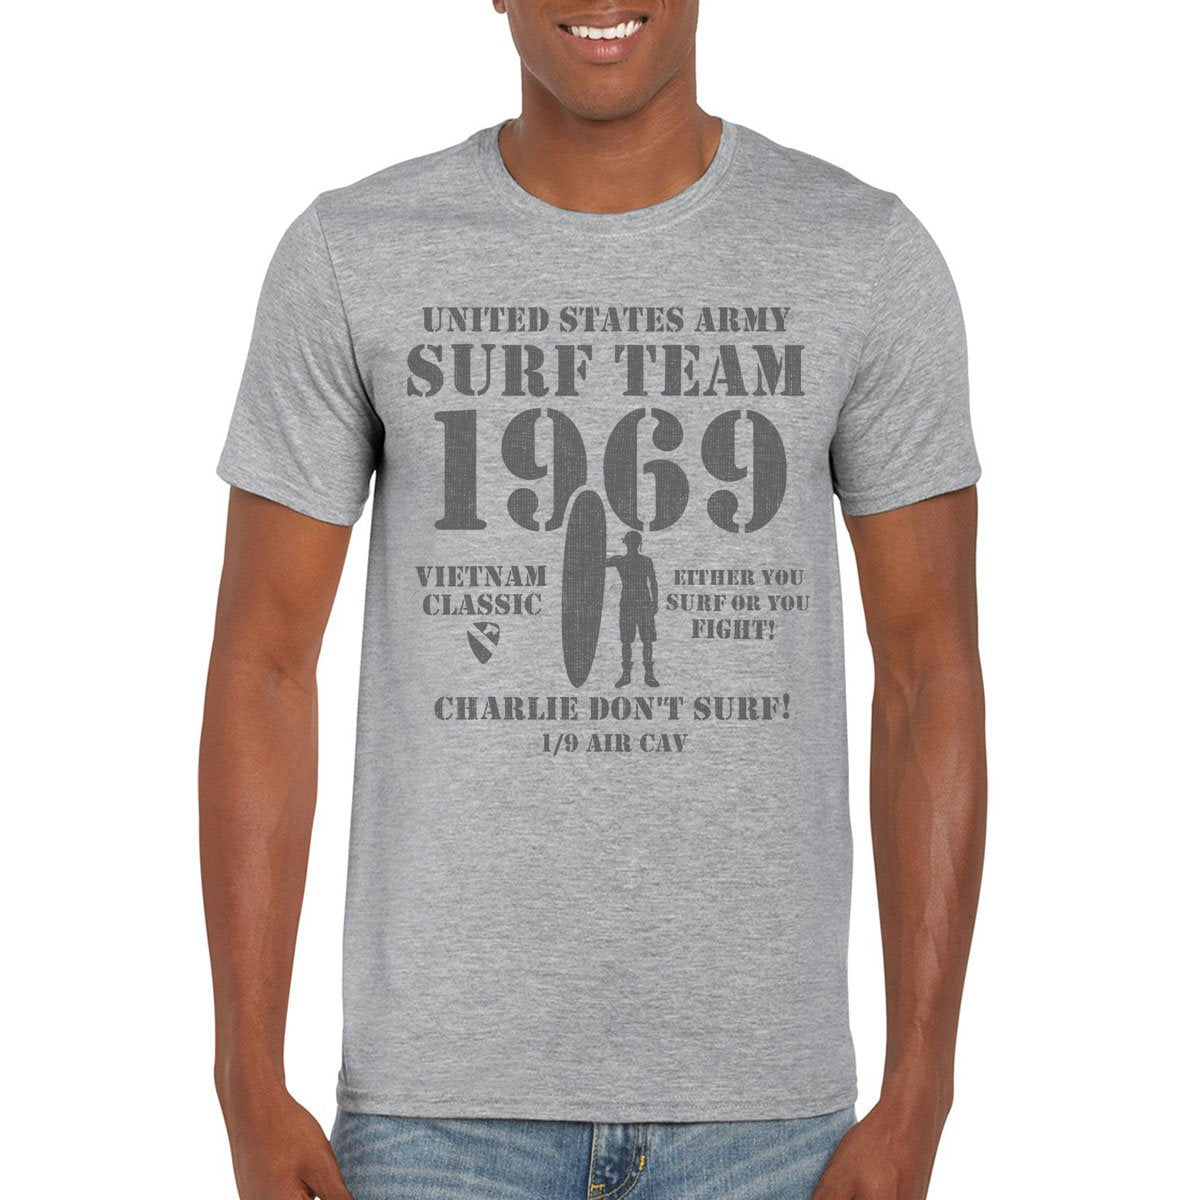 VIETNAM SURF CLASSIC T-Shirt